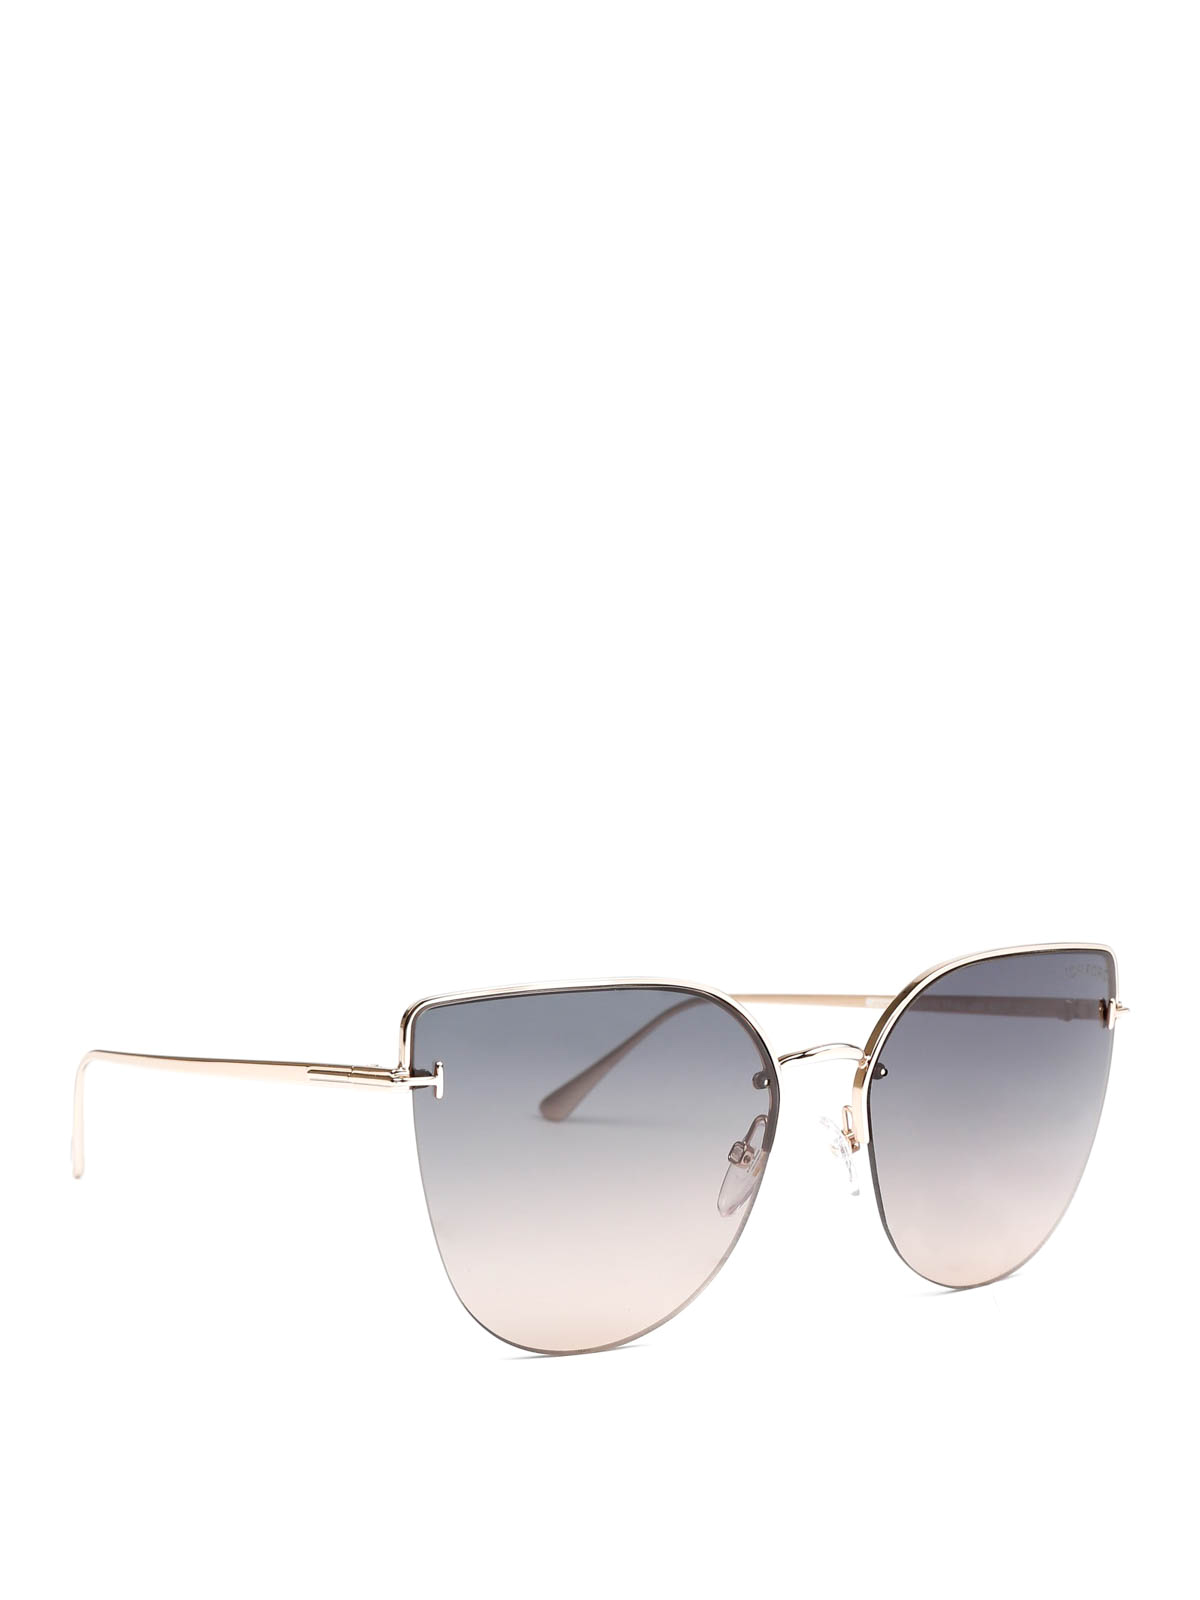 Sunglasses Tom Ford - Ingrid sunglasses - FT065228B | Shop online at iKRIX